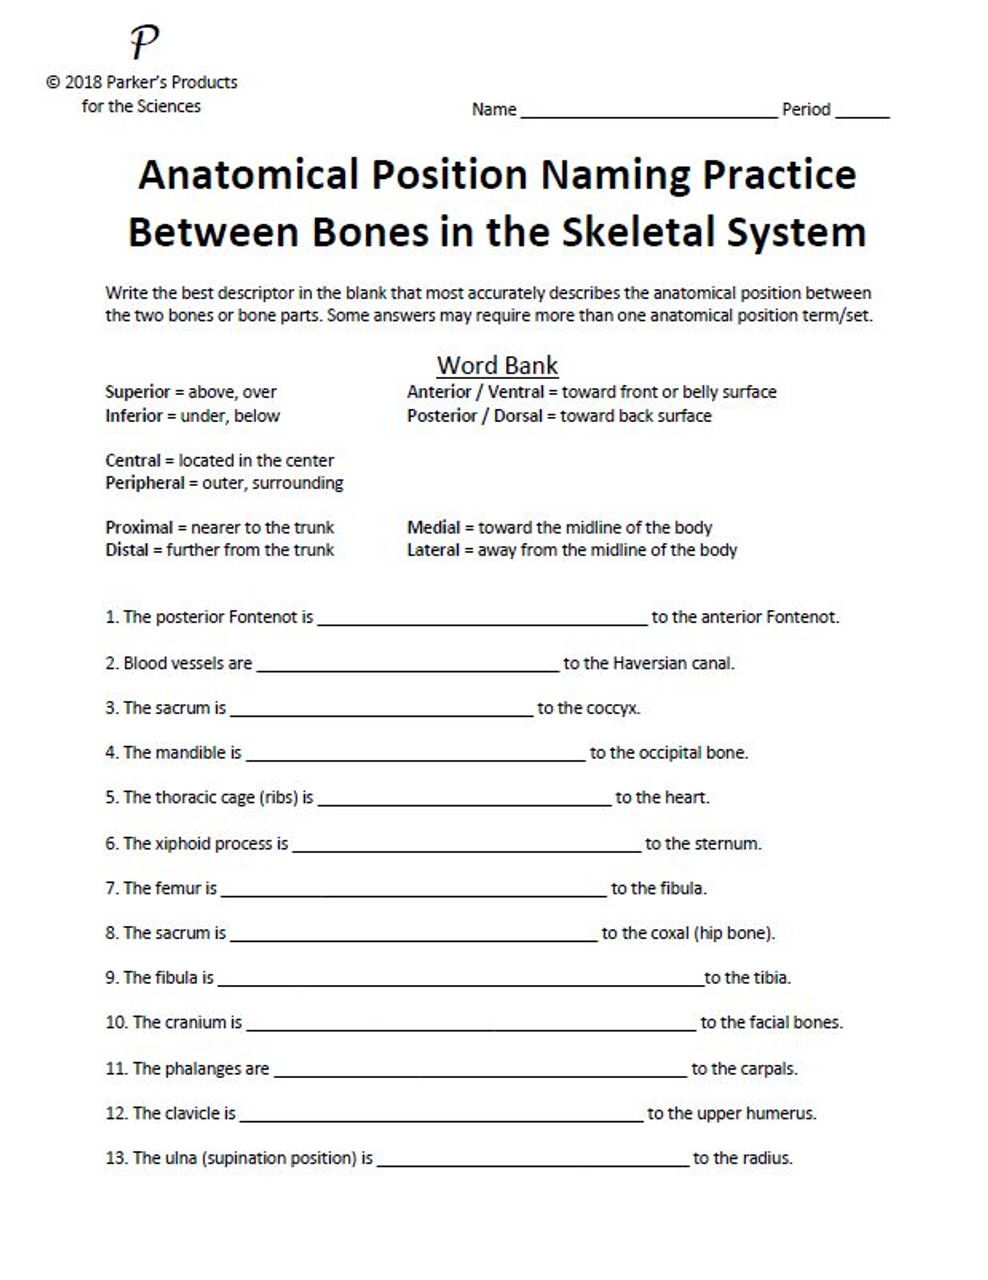 Anatomical Position Naming Practice Between Bones in the Skeletal System